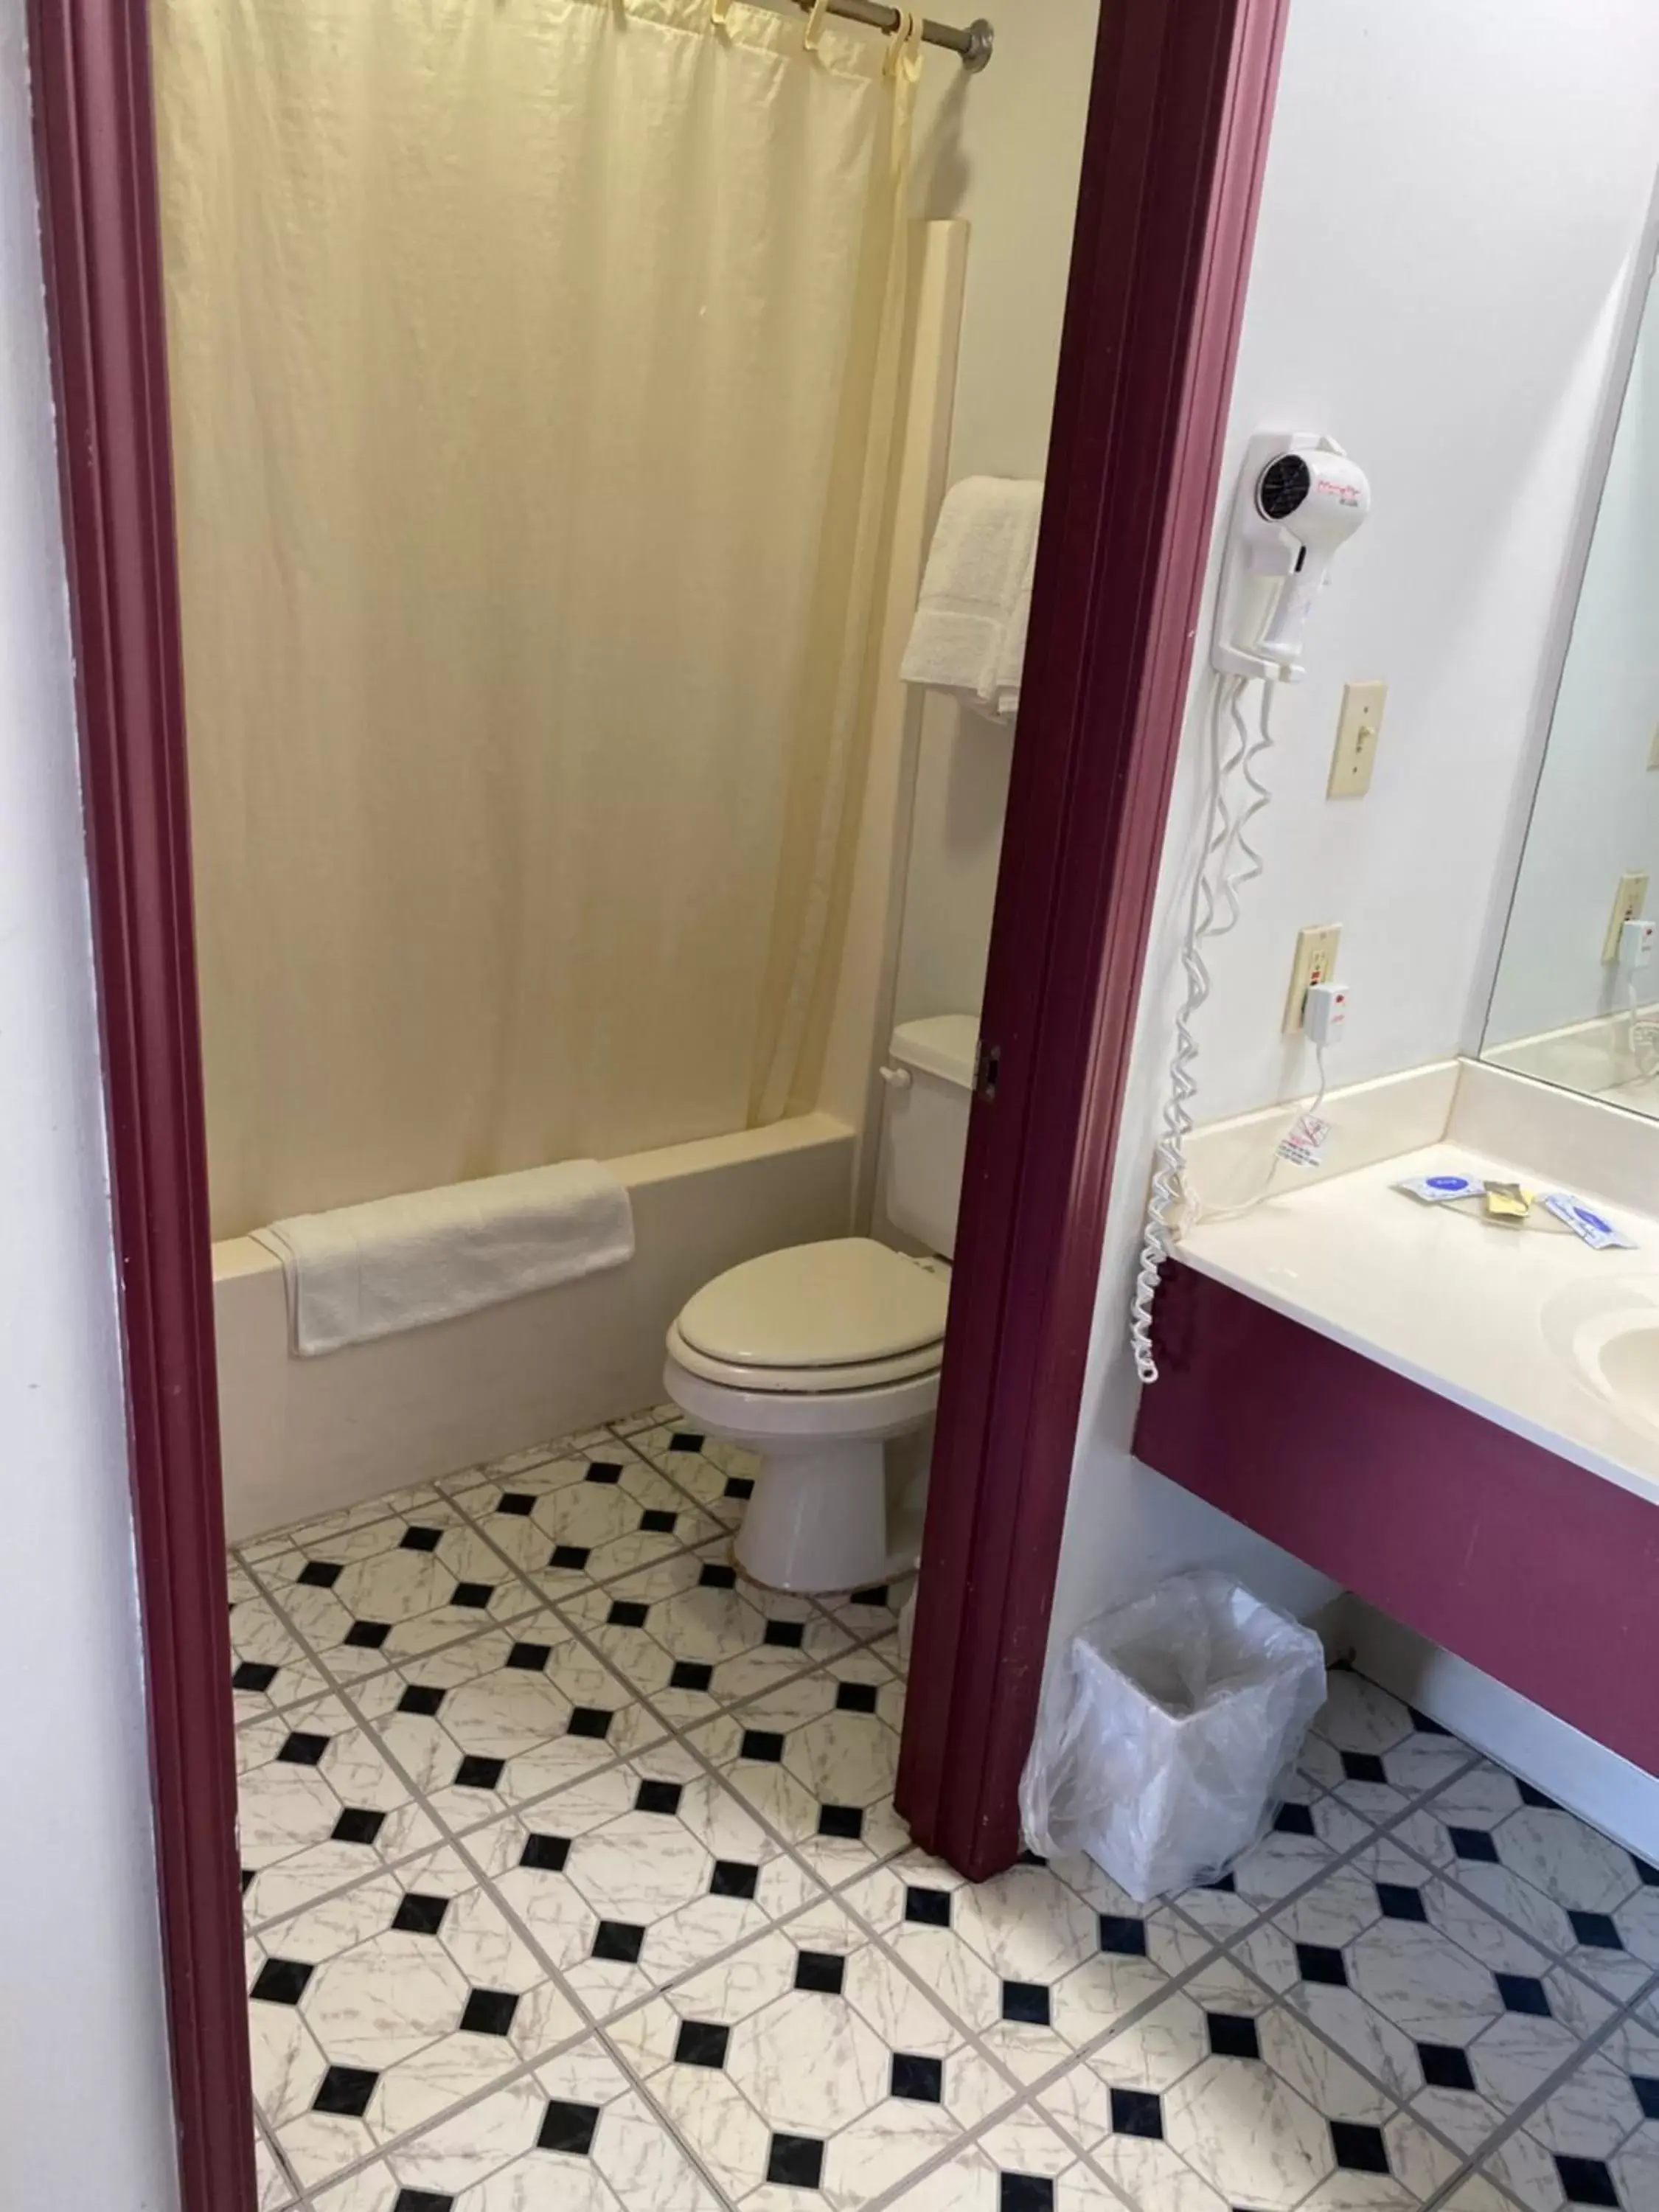 Bathroom in royal inn